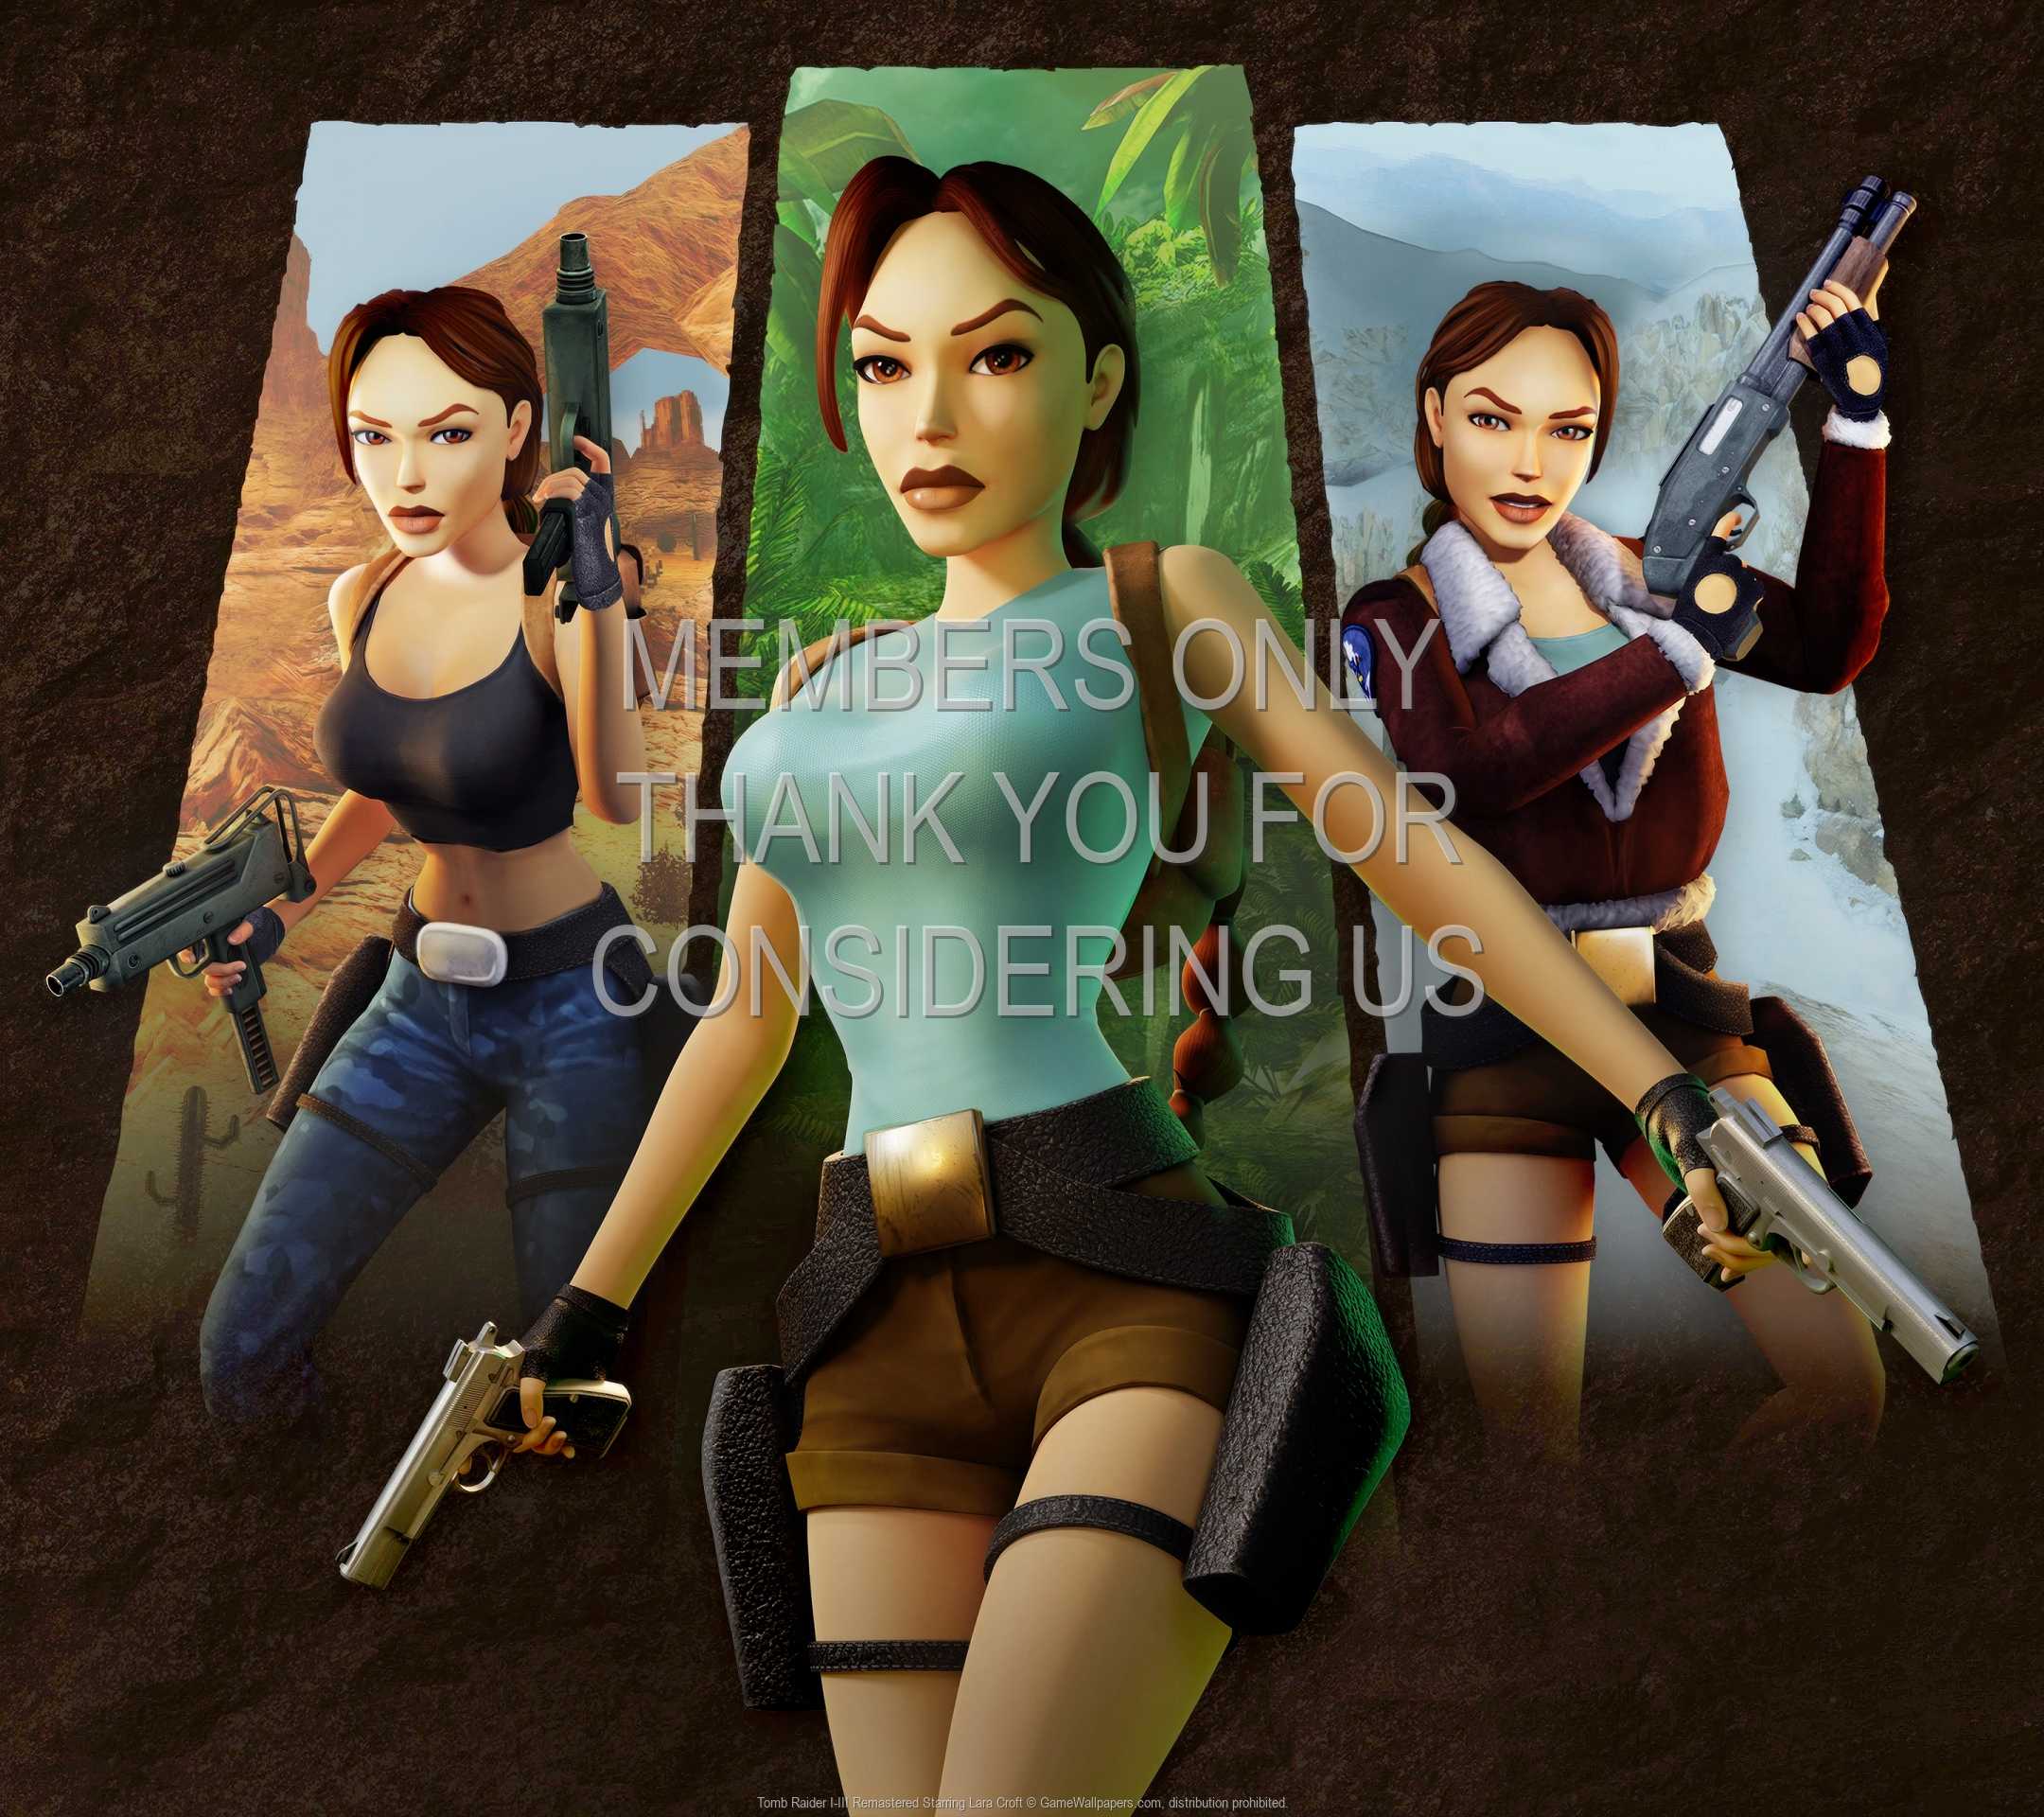 Tomb Raider I-III Remastered Starring Lara Croft 1080p%20Horizontal Mobile wallpaper or background 01